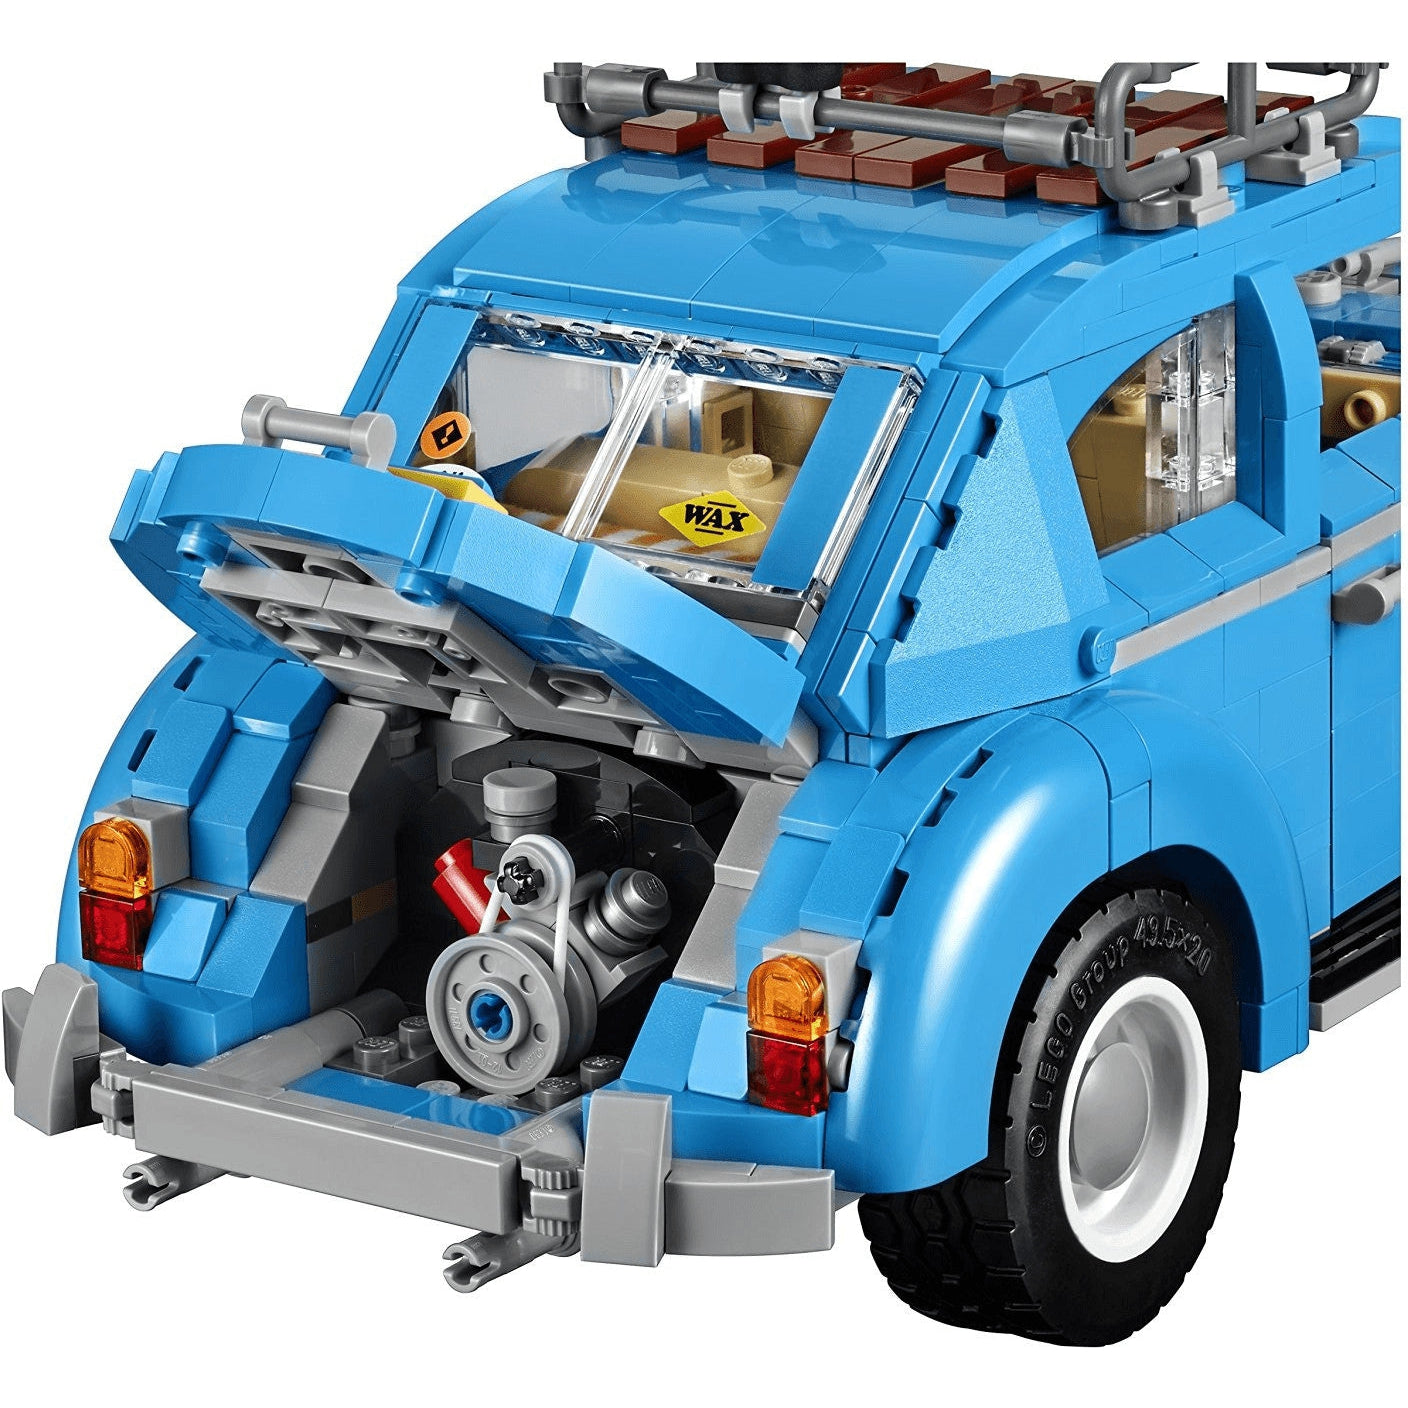 LEGO 10252 Creator Expert VW Käfer